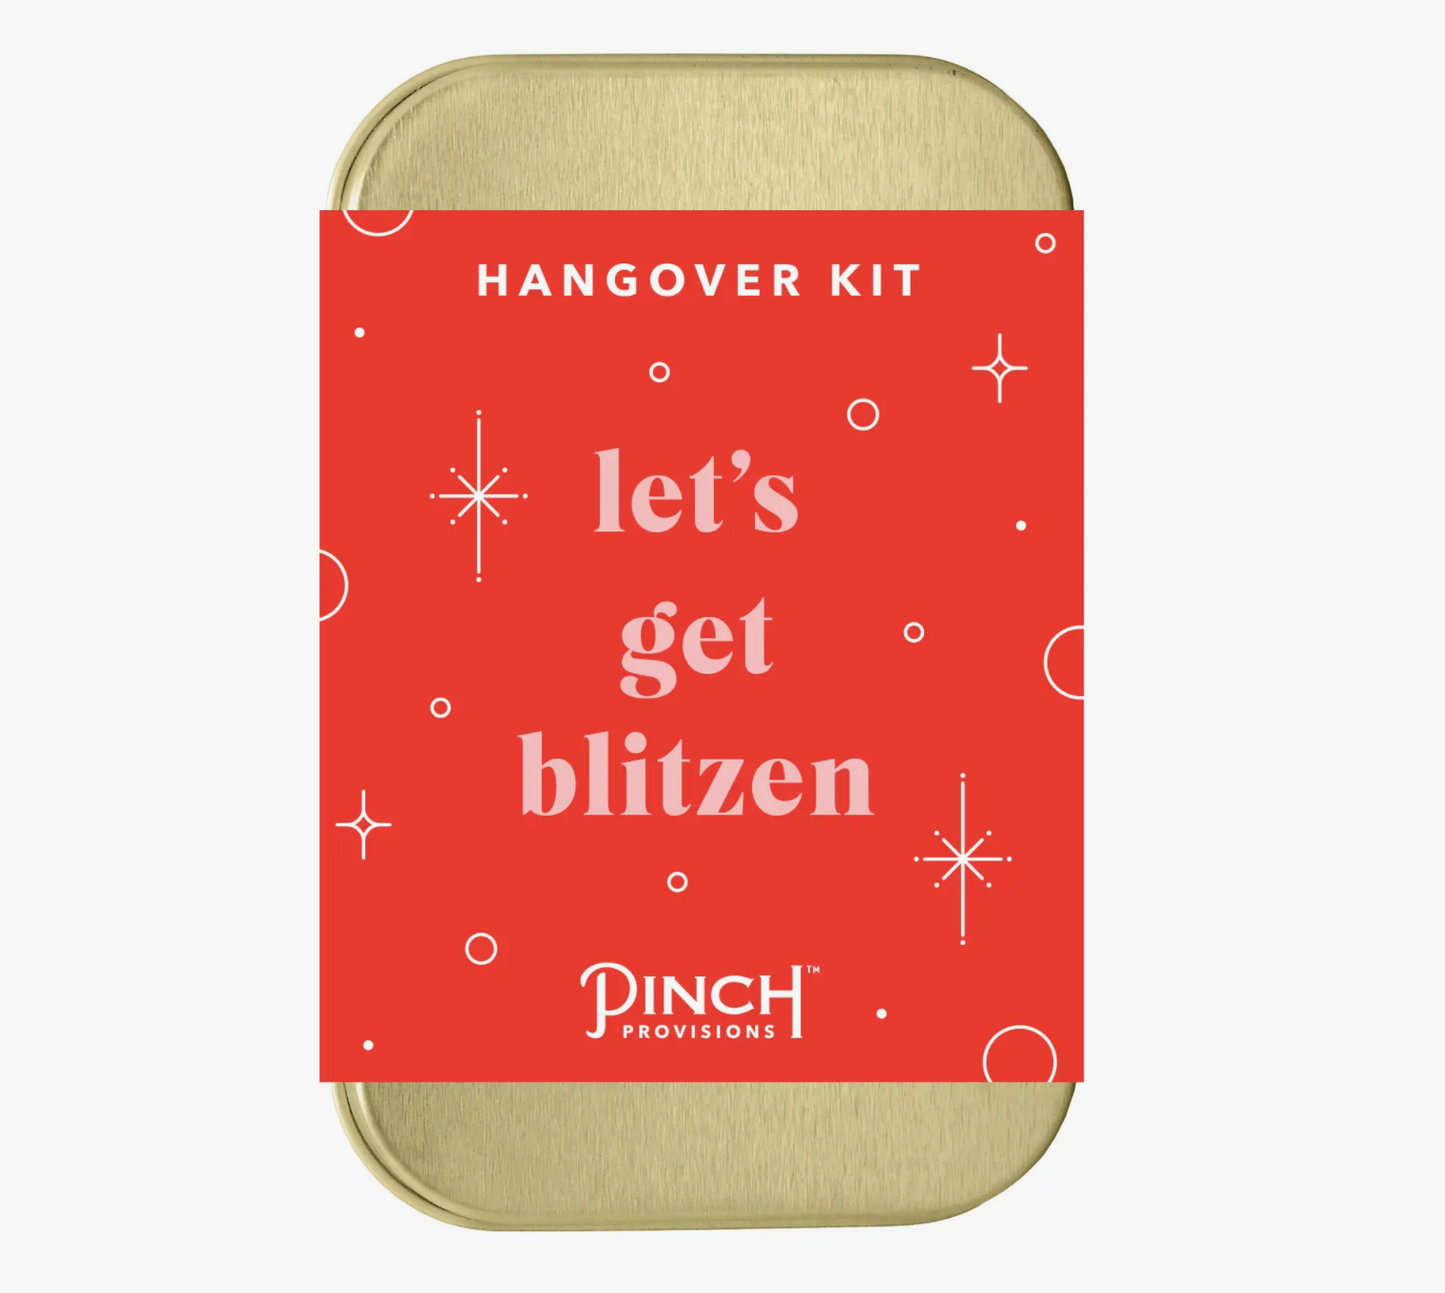 Hangover Kit - Get Blitzen